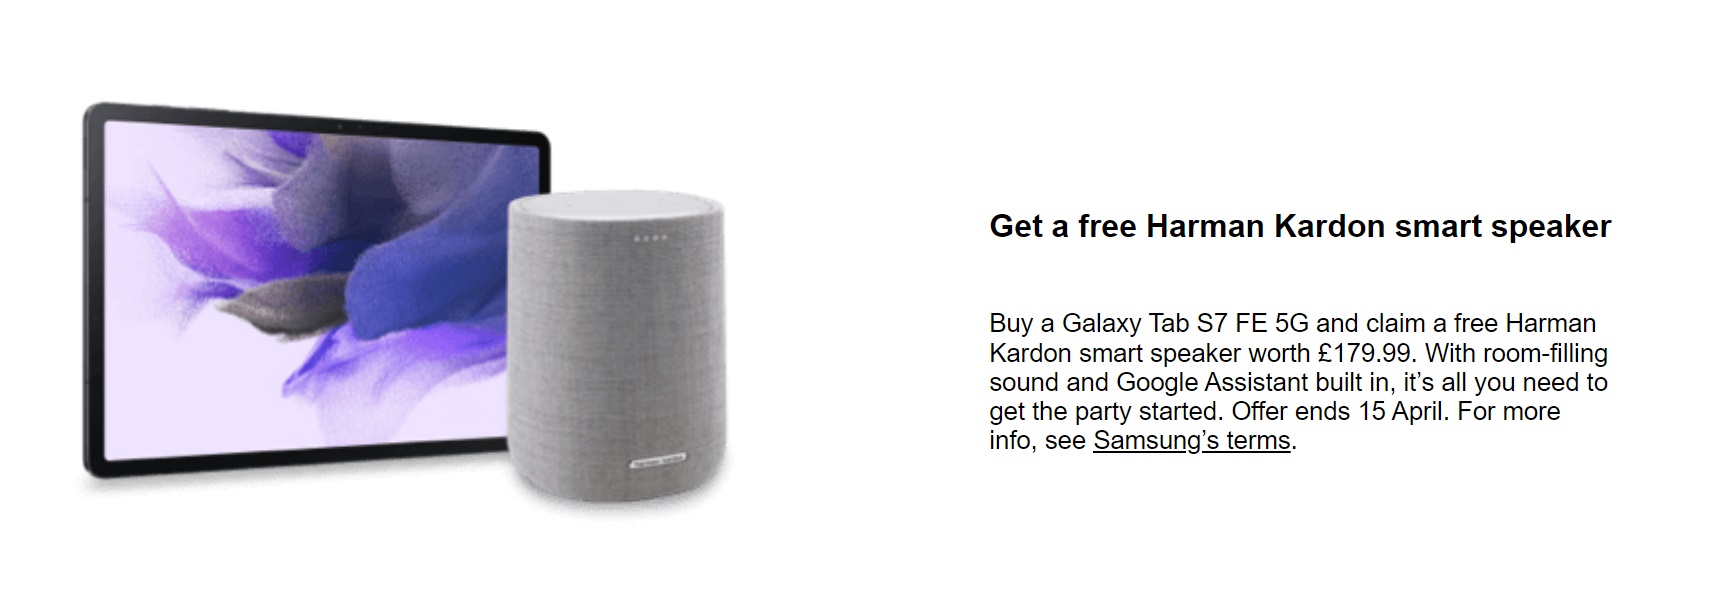 Free Citation One Speaker by Harman Kardon with Samsung Galaxy Tab S7 FE deals